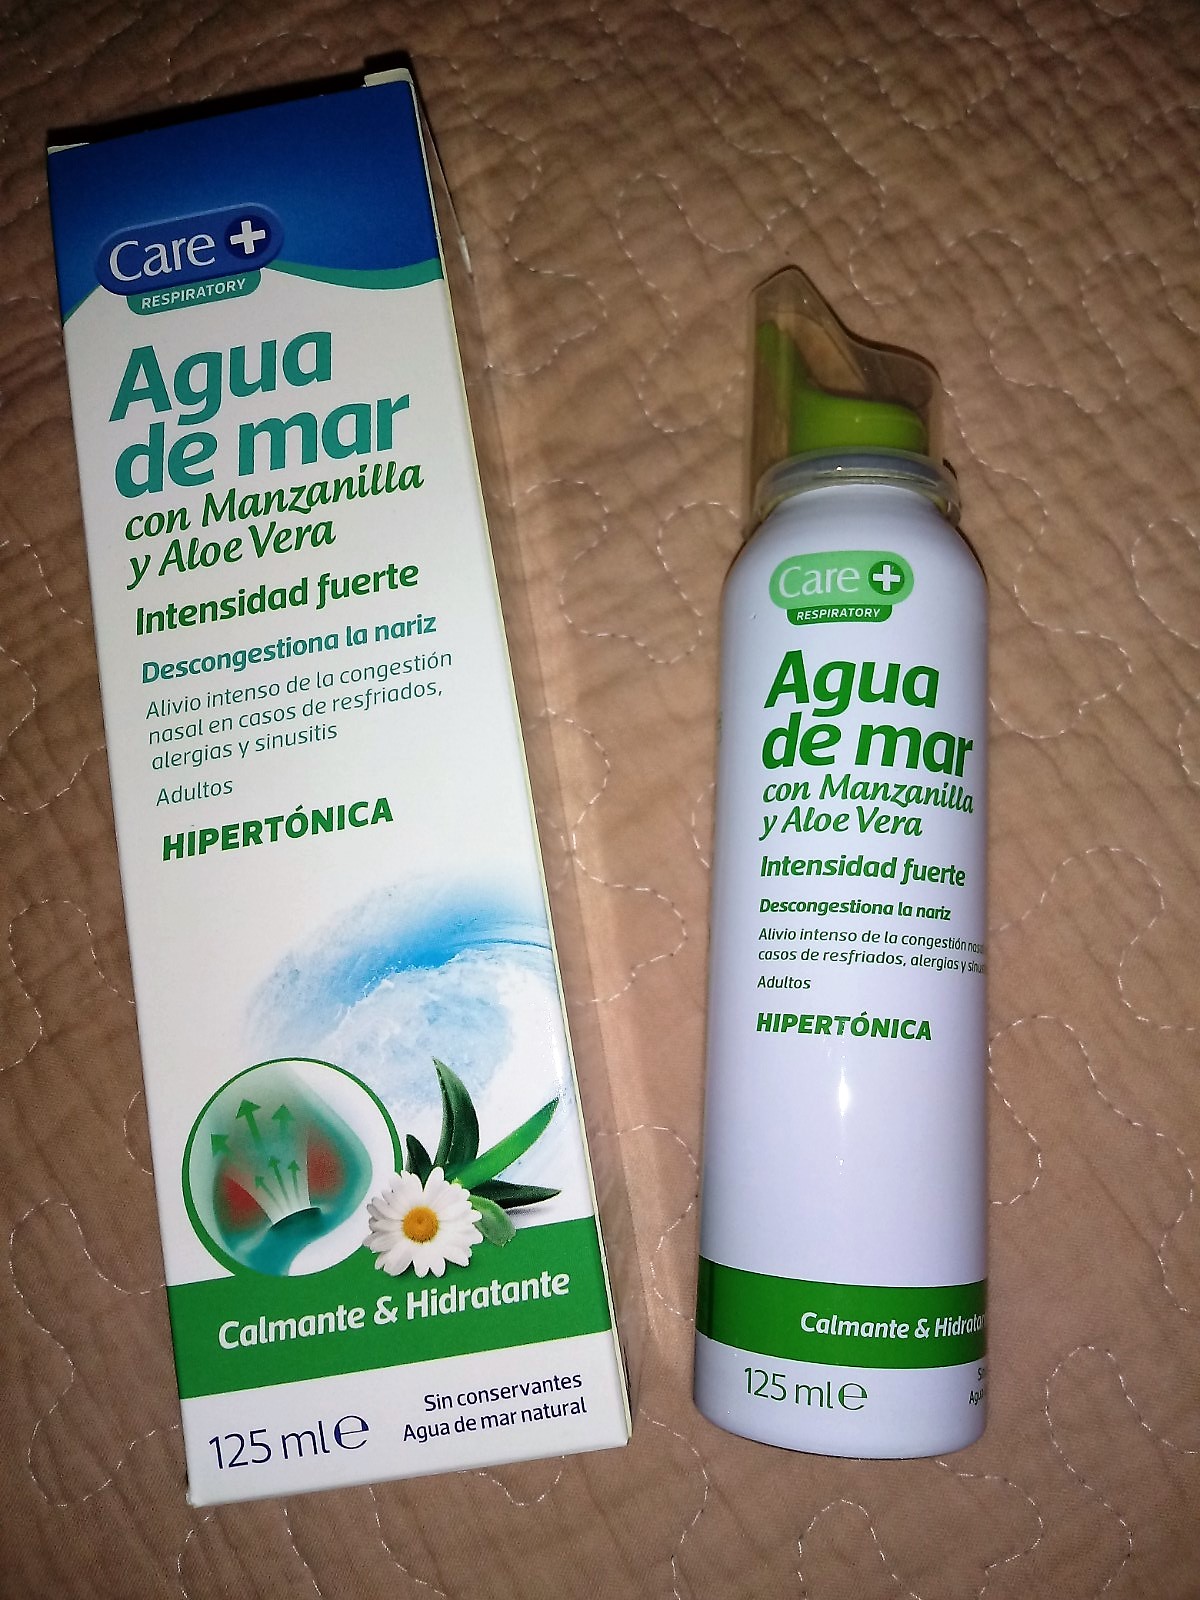 Care+ Respiratory Agua de Mar con Manzanilla y Aloe Vera, 125 ml